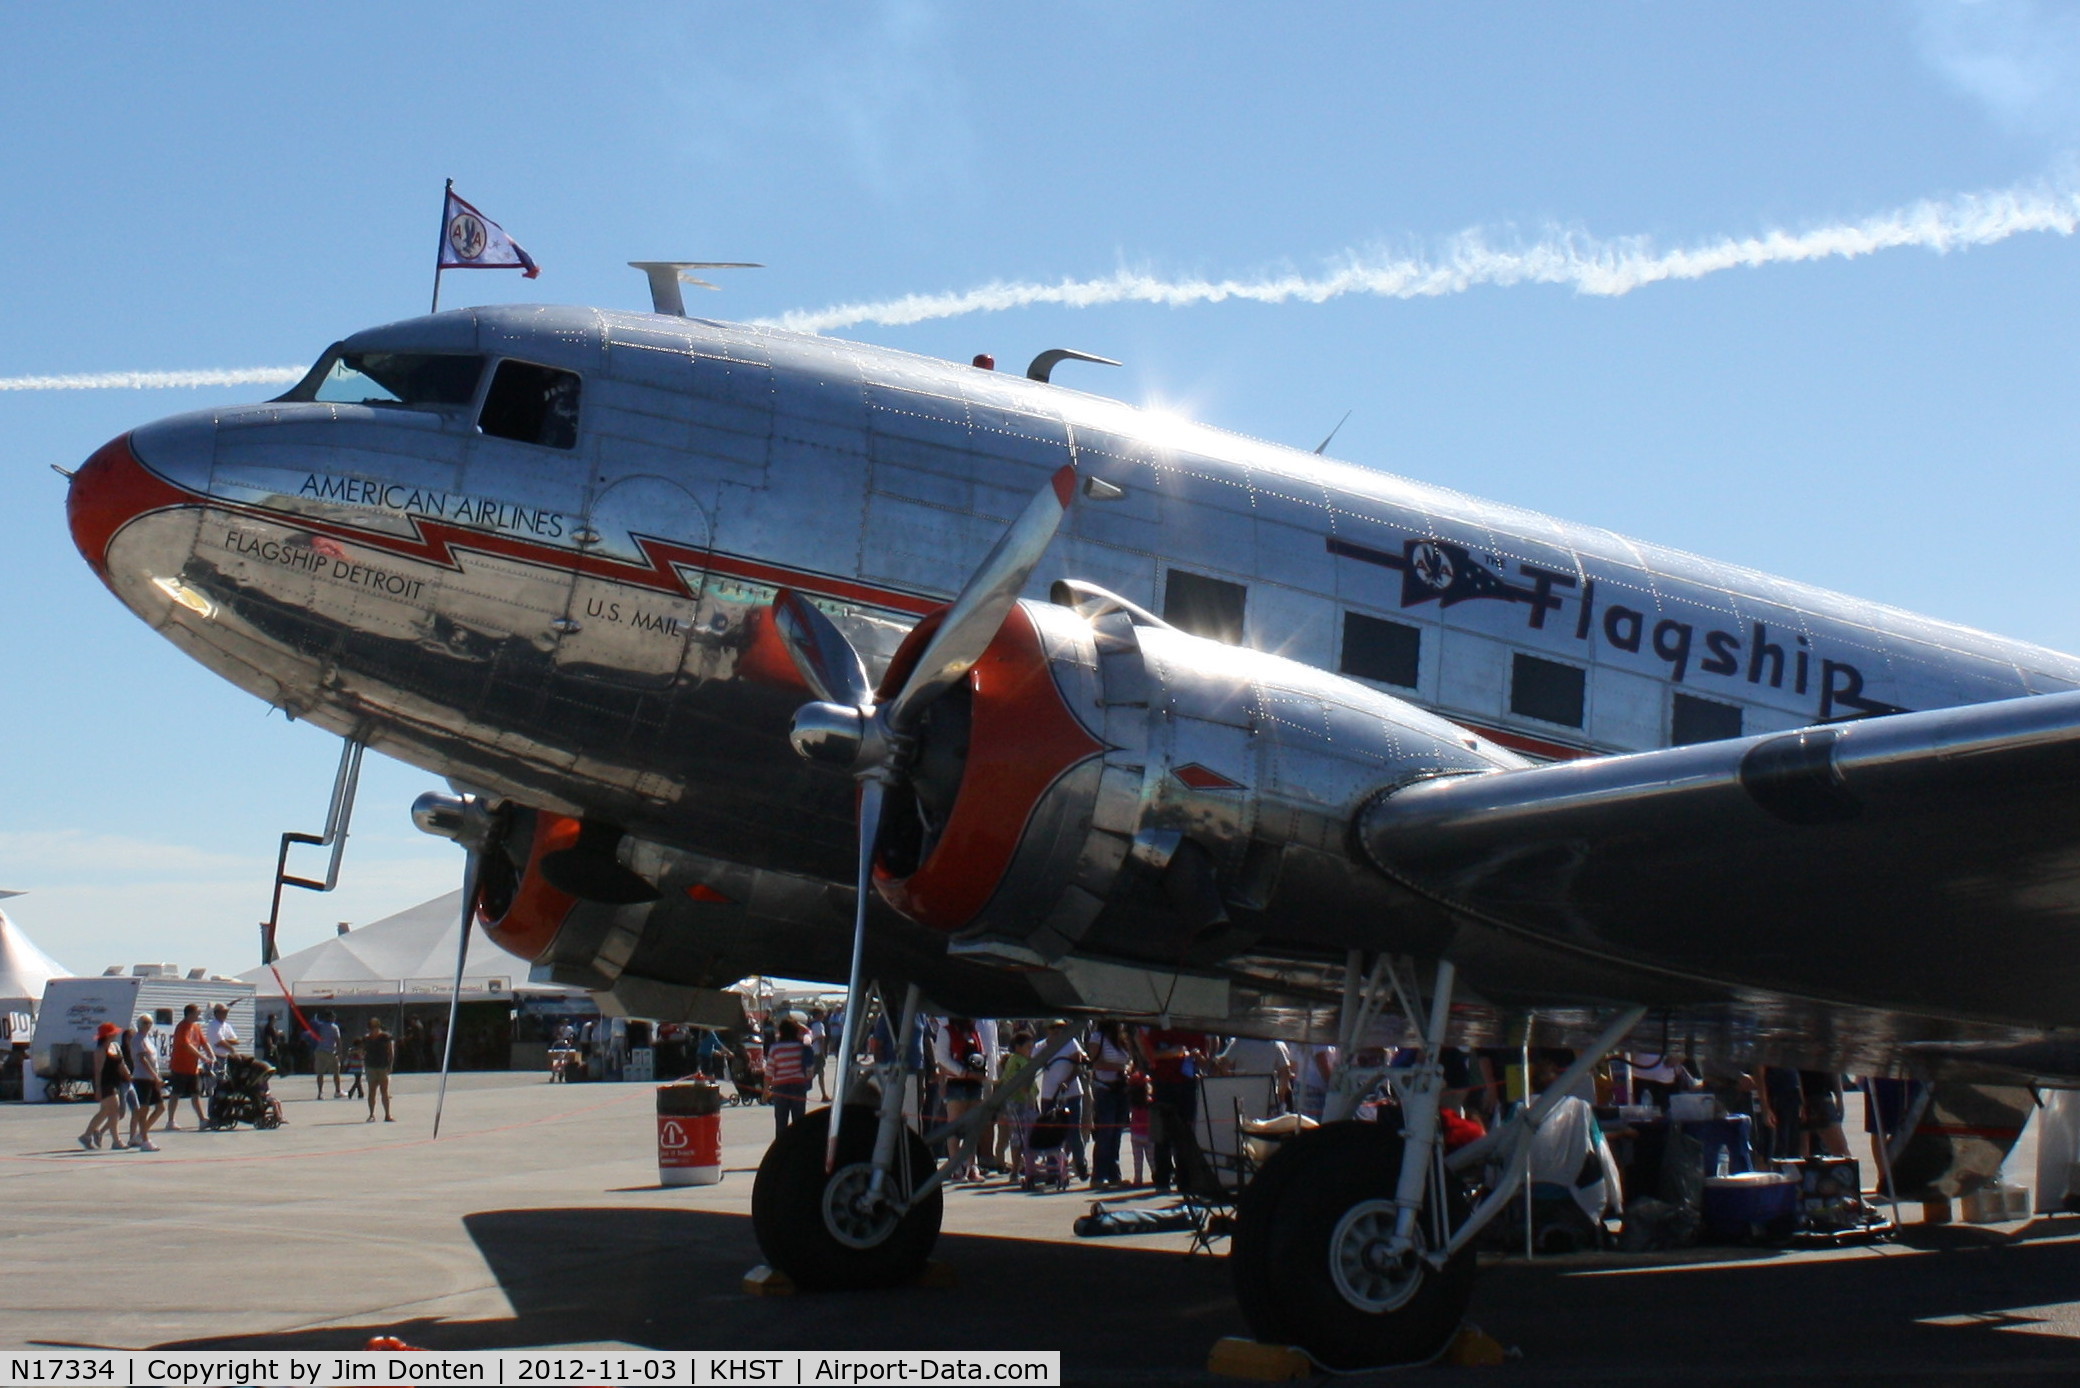 N17334, 1937 Douglas DC-3-178 C/N 1920, Flagship Detroit (NC17334) sits on static display at Wings over Homestead